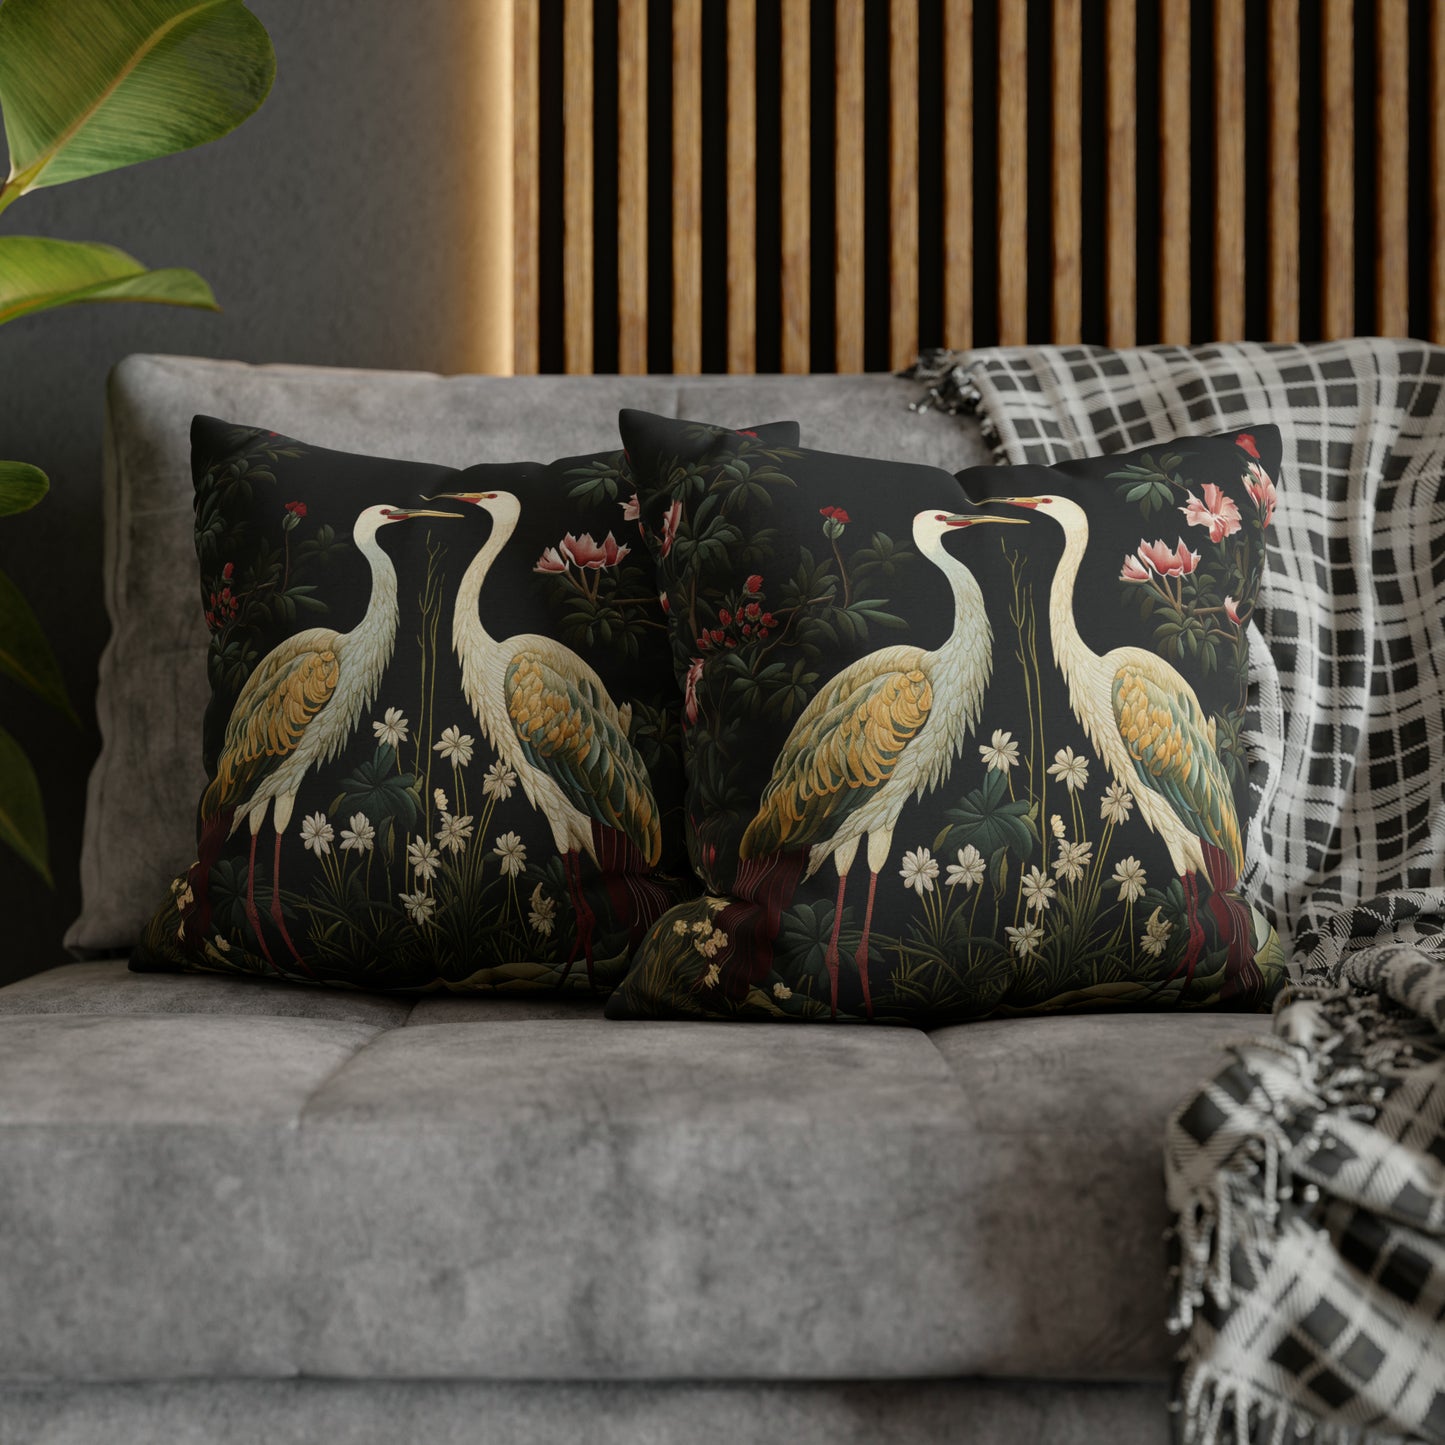 Crane Couple in Floral Garden Pillow William Morris Inspired